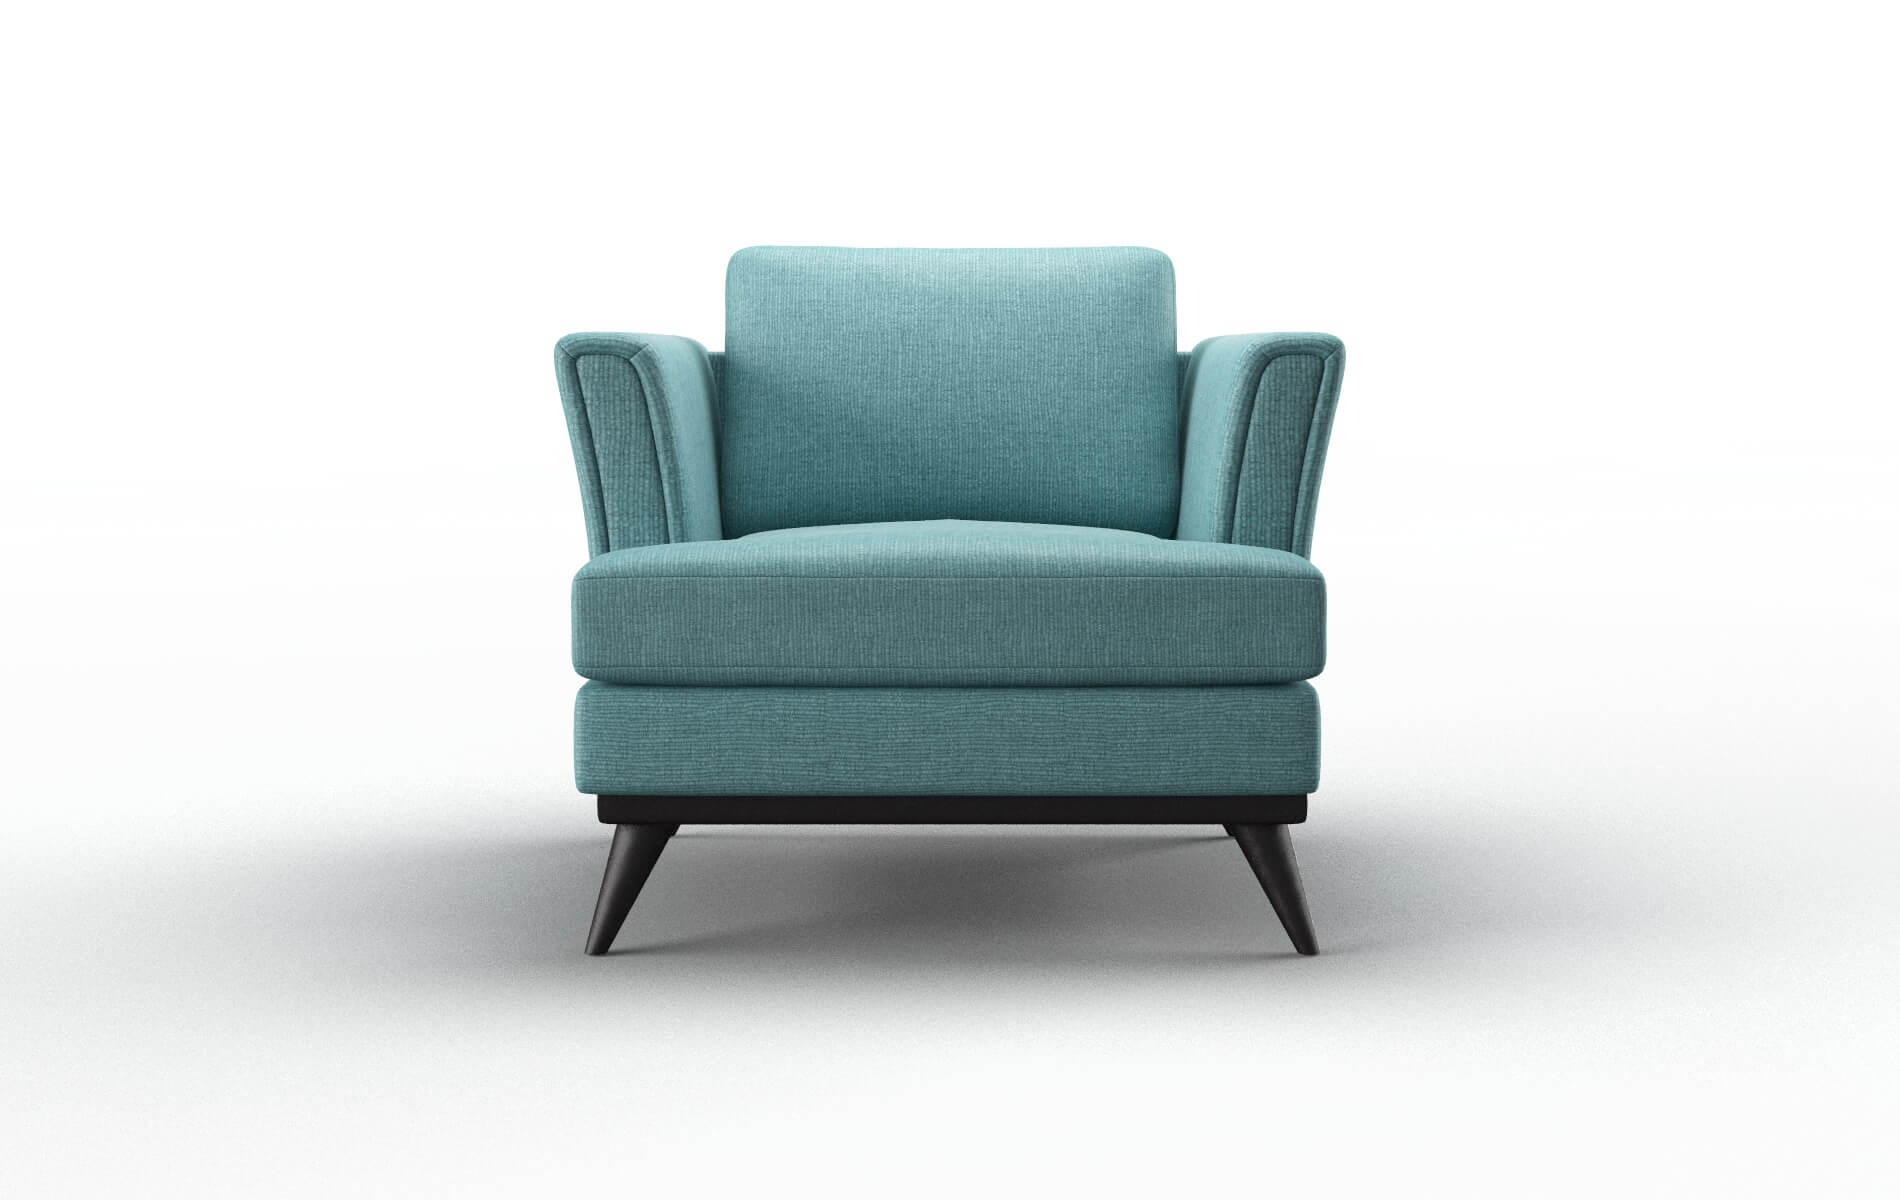 Antalya Parker Turquoise Chair espresso legs 1